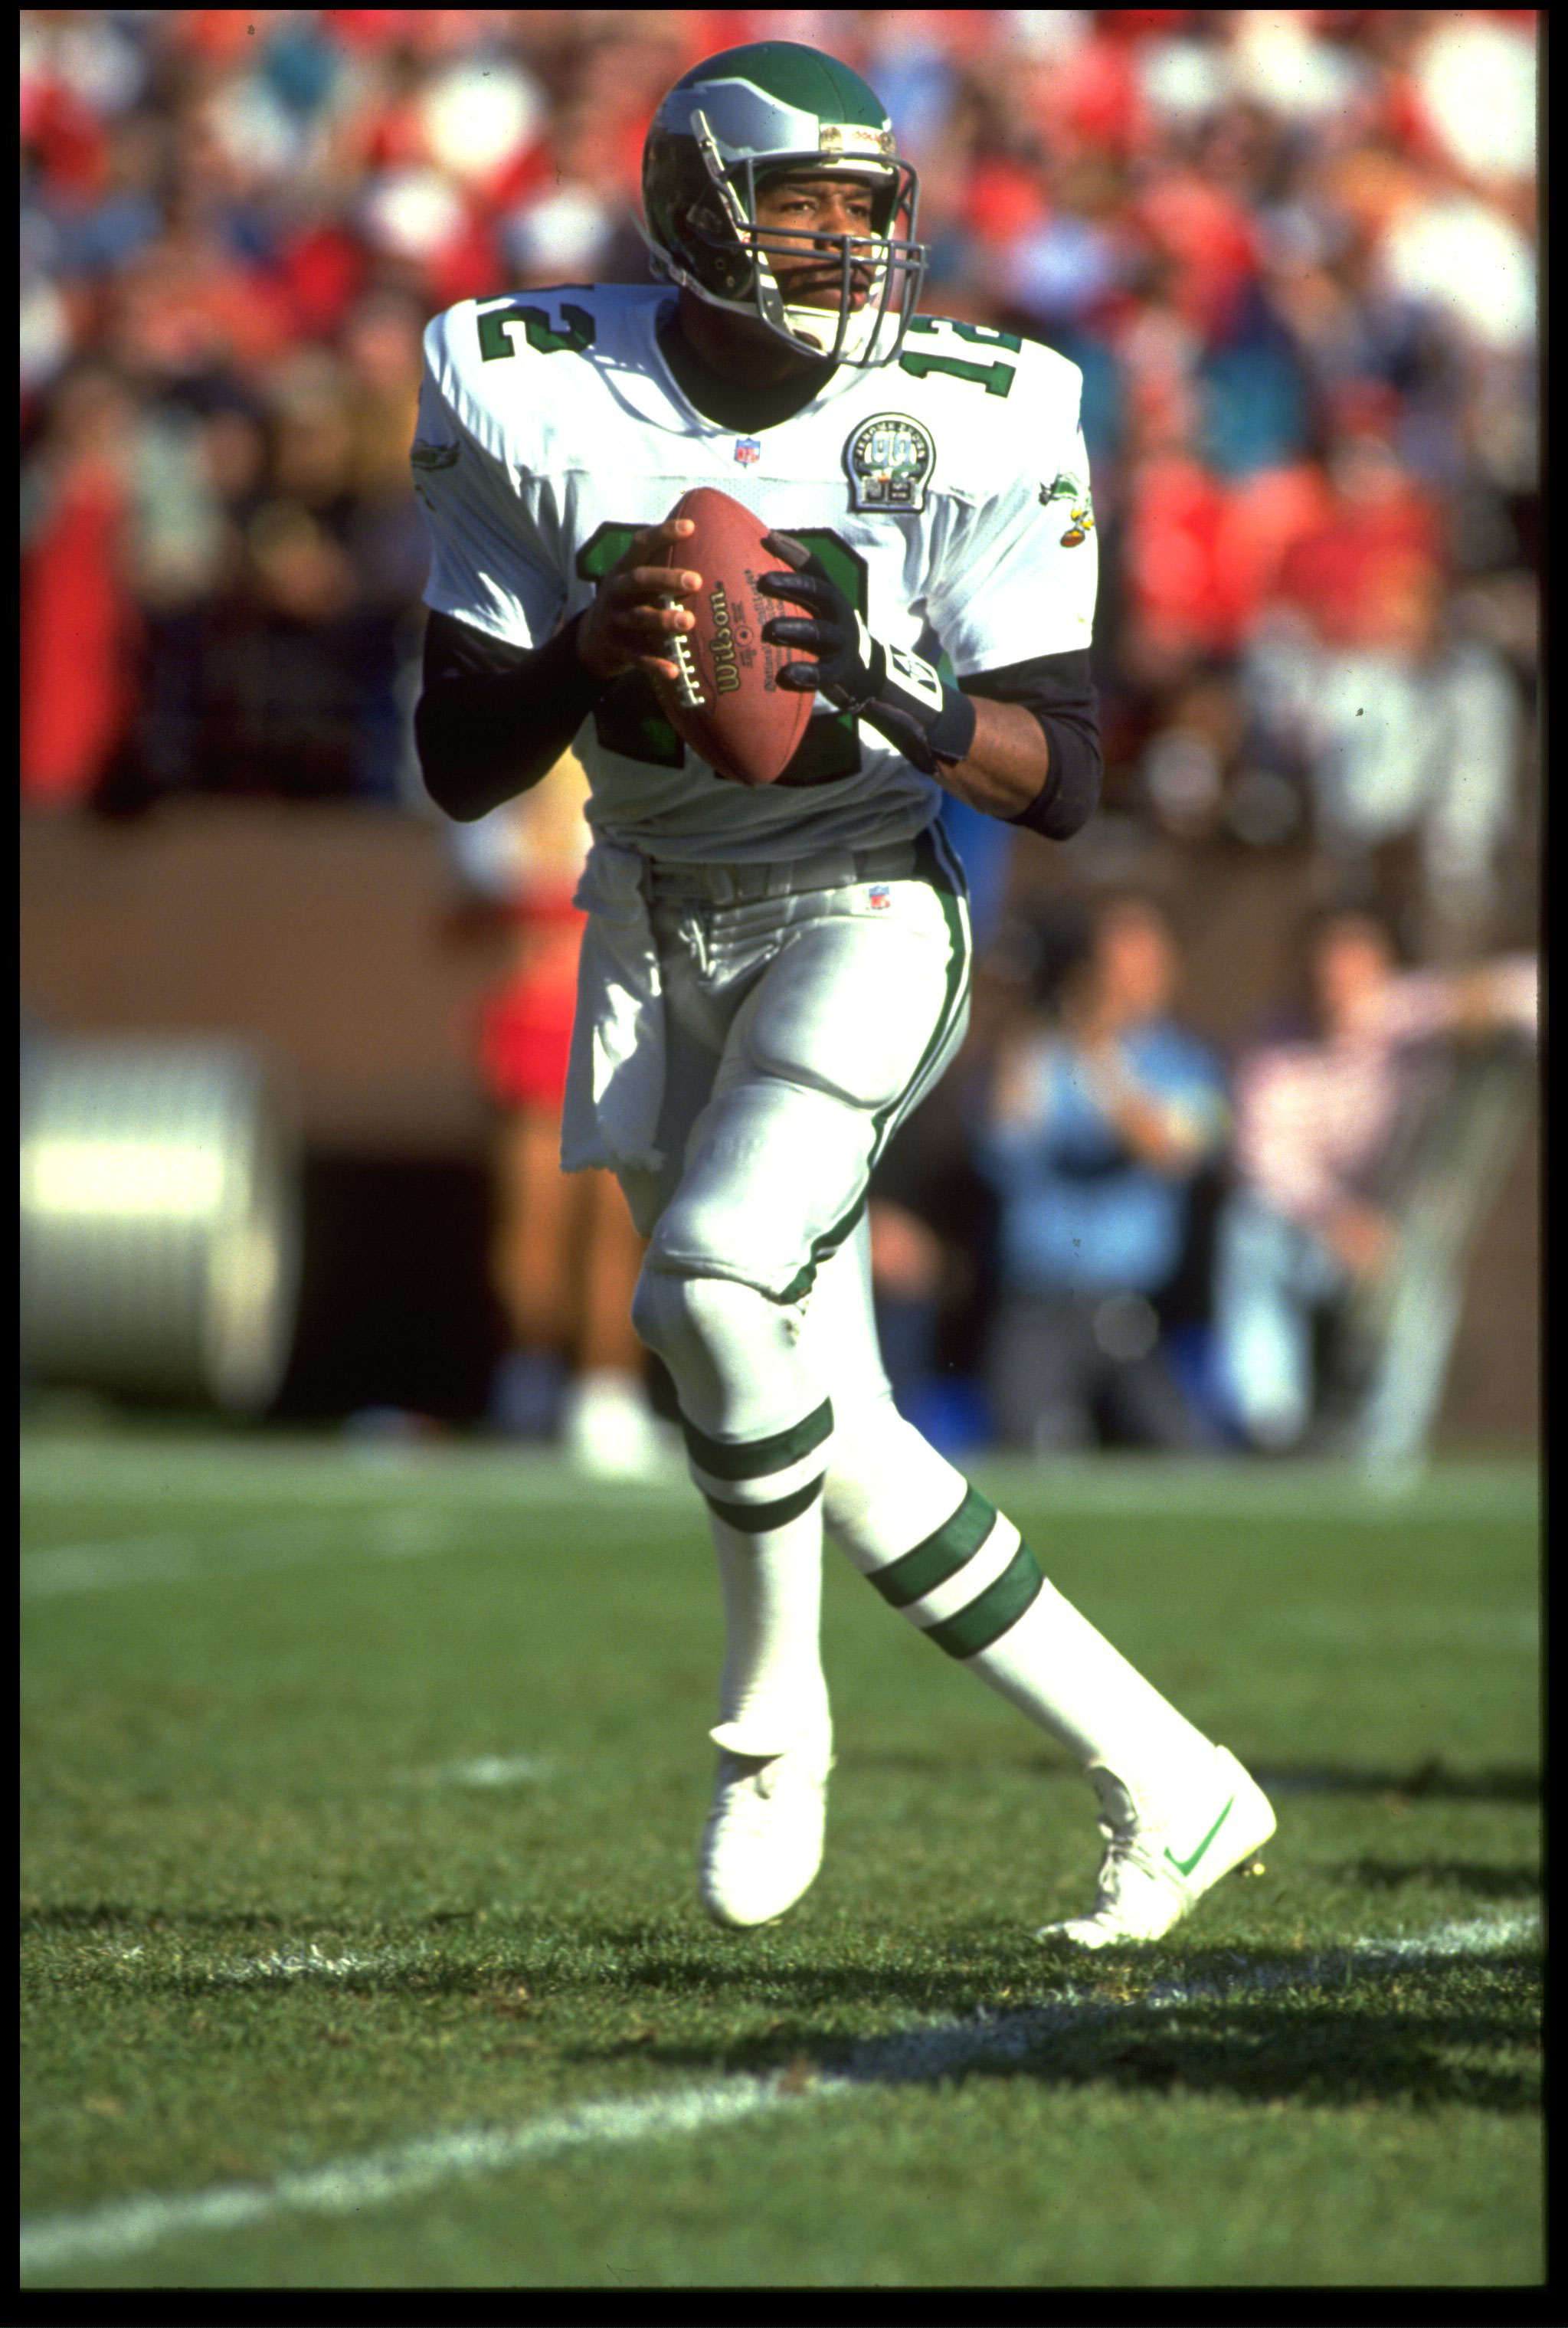 1992 Philadelphia Eagles season - Wikipedia